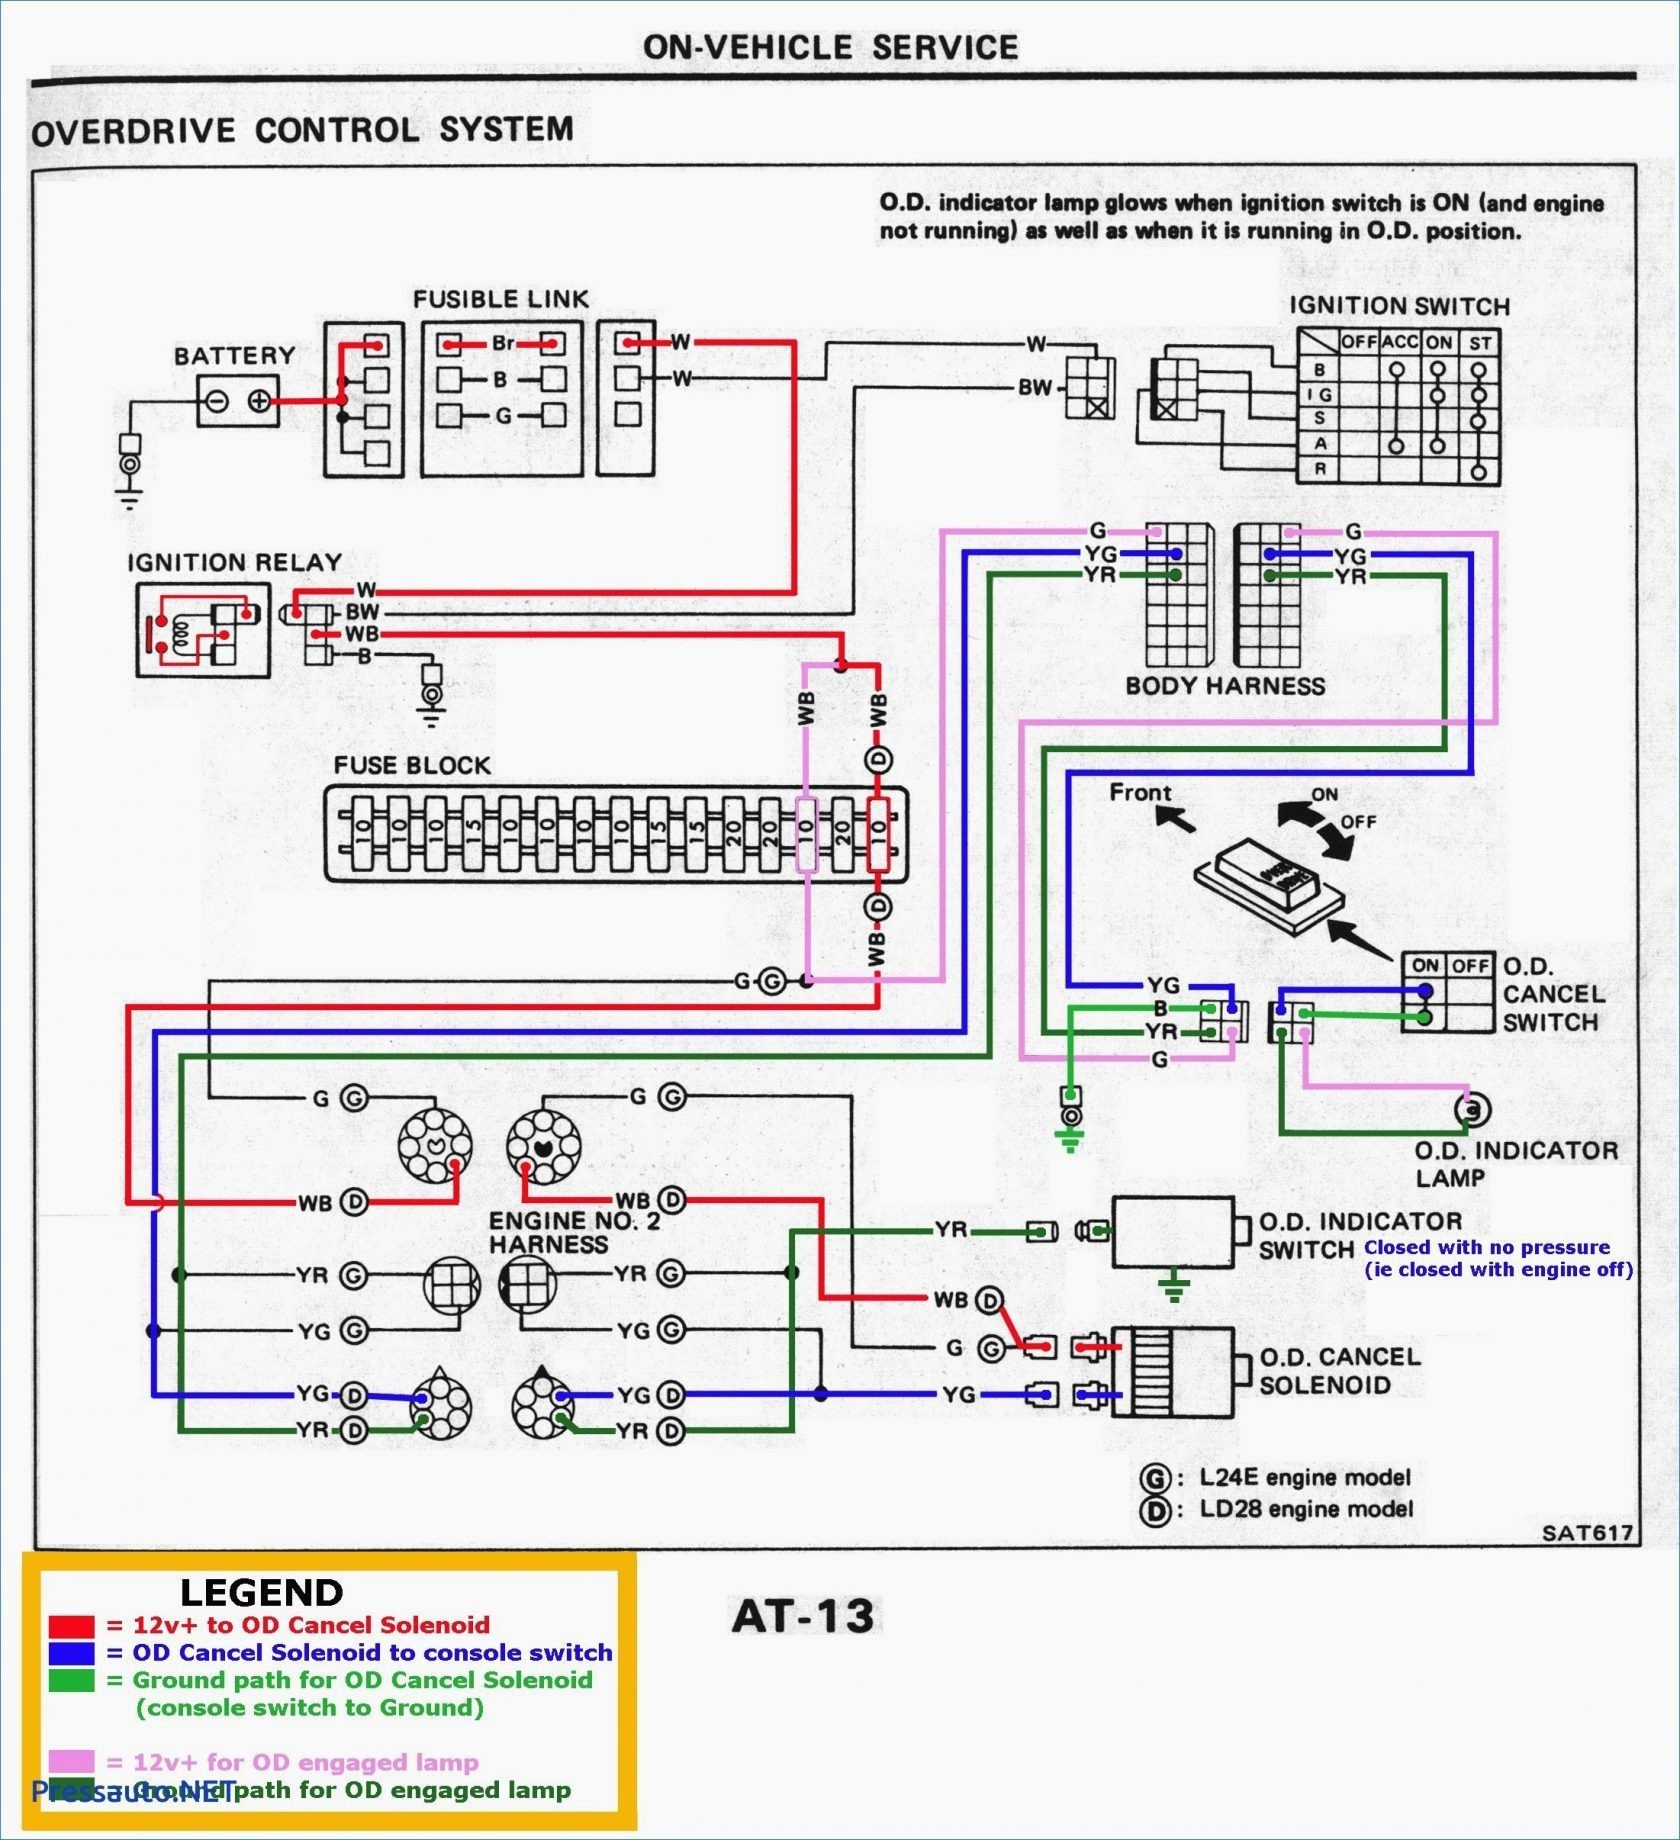 2004 Chevy Cavalier Wiring Diagram 1988 Cavalier Wiring Diagram Wiring Diagram Inside Of 2004 Chevy Cavalier Wiring Diagram